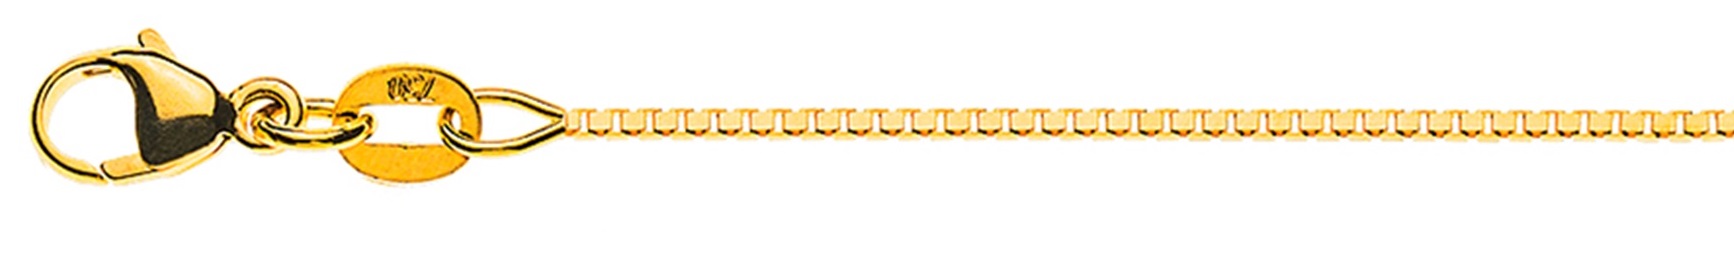 AURONOS Style Necklace yellow gold 9K Venetian chain diamond cut 50cm 0.9mm